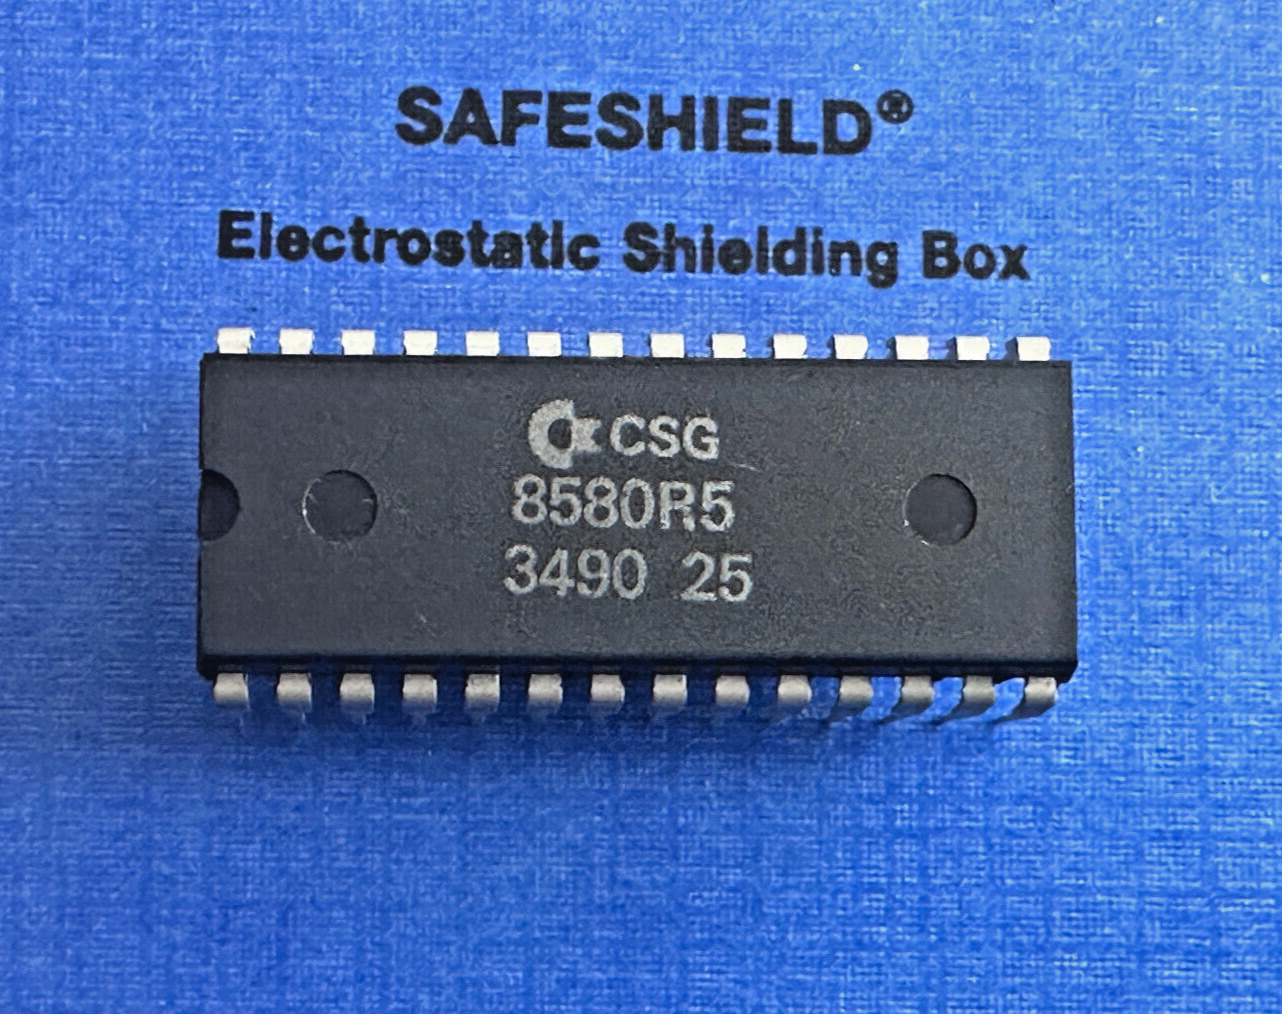 8580r5 Chip IC CSG / MOS SID Soundchip, Commodore C64 # 34 90